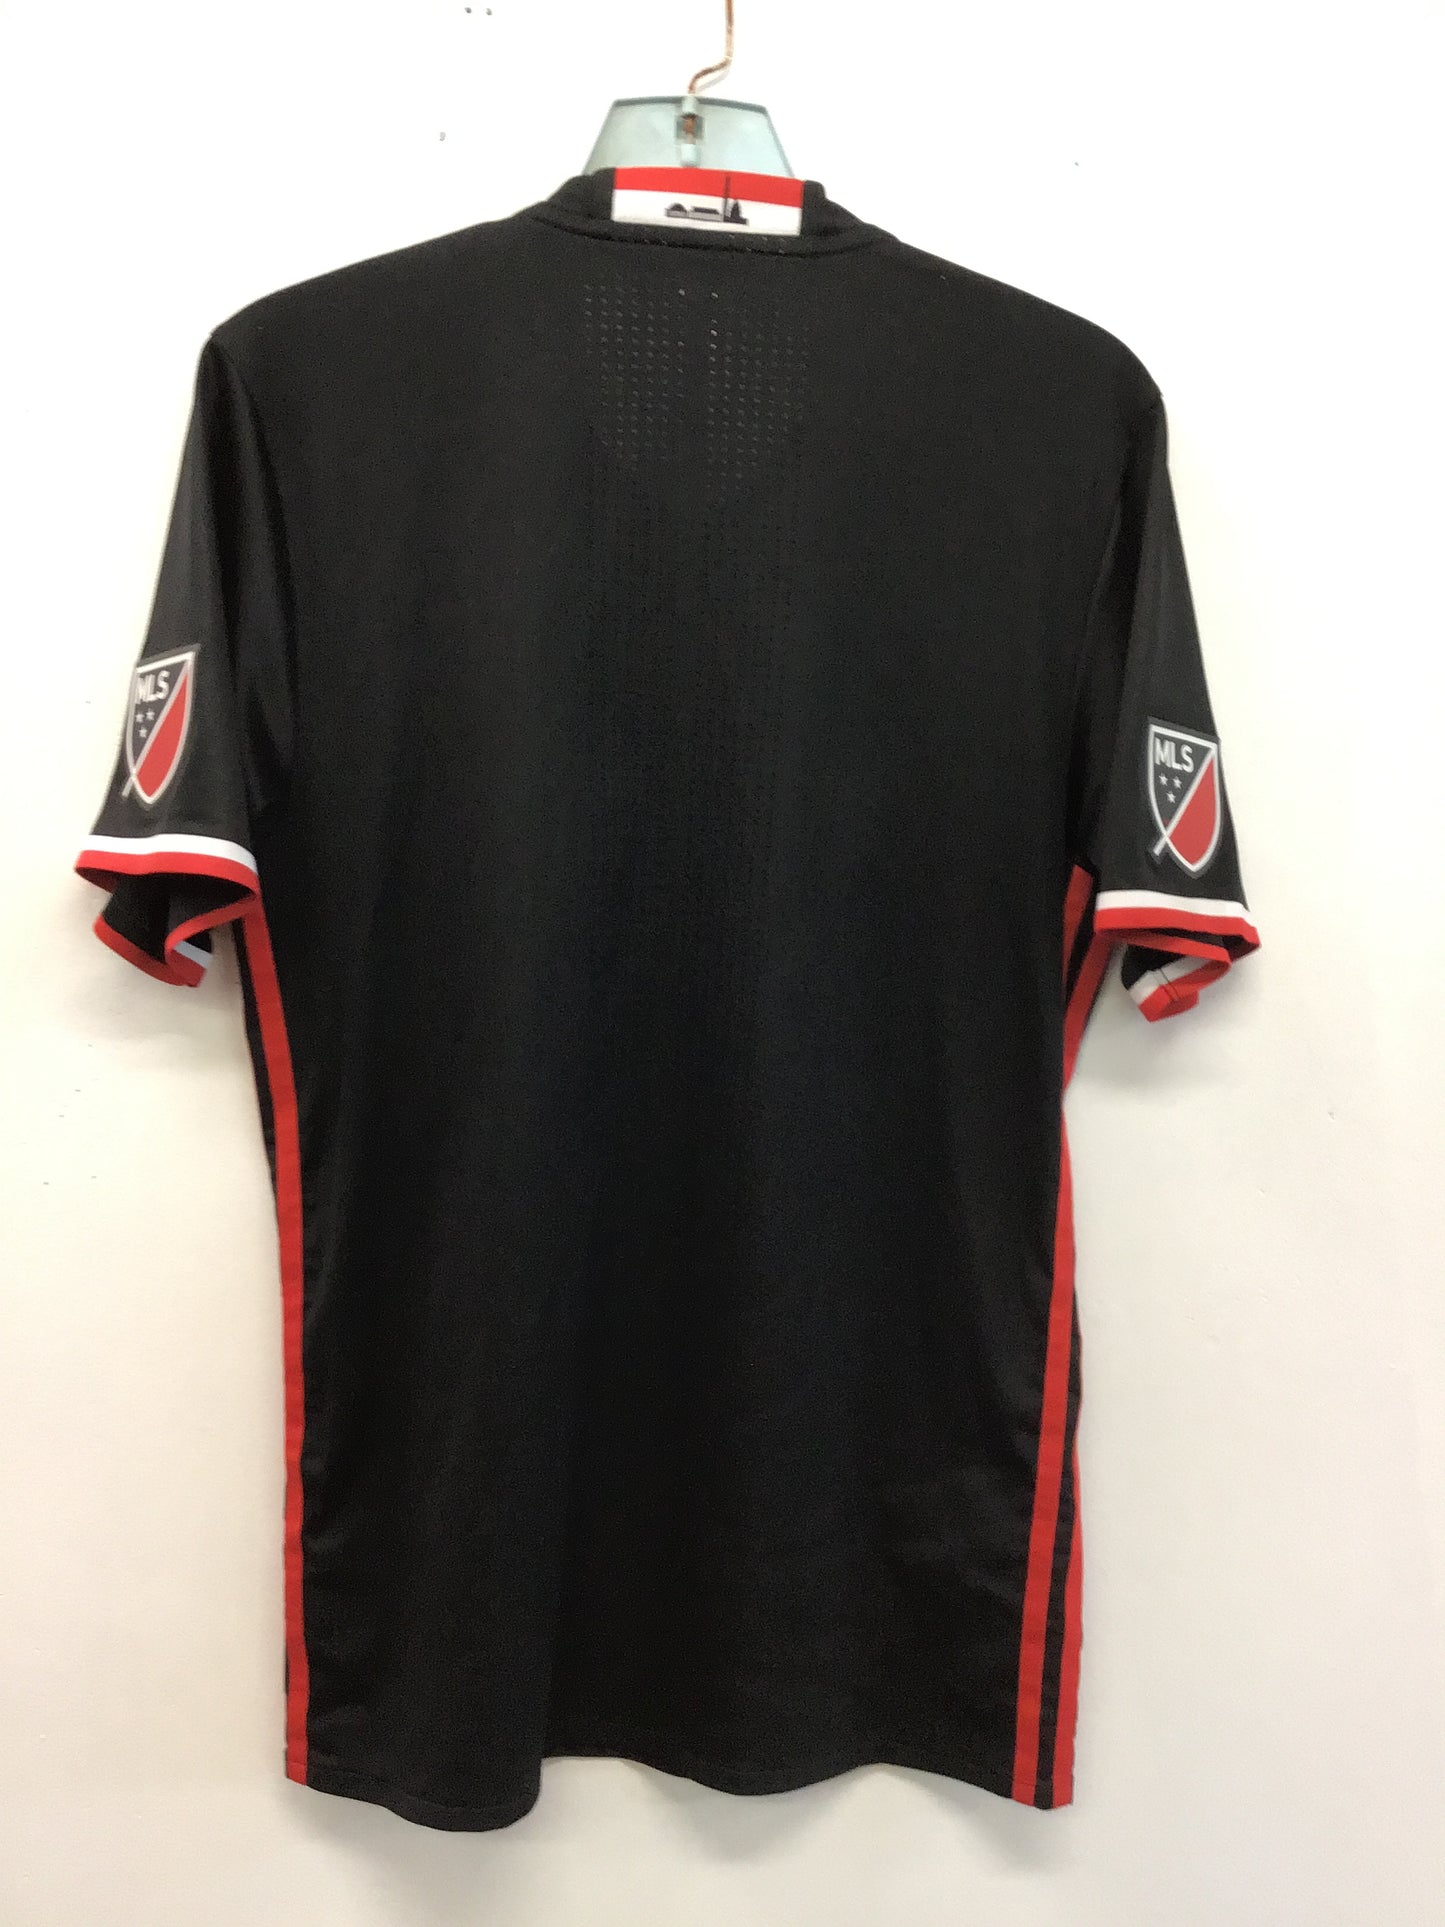 Adidas D.C. United 2016 Black Leidos Jersey, Size M